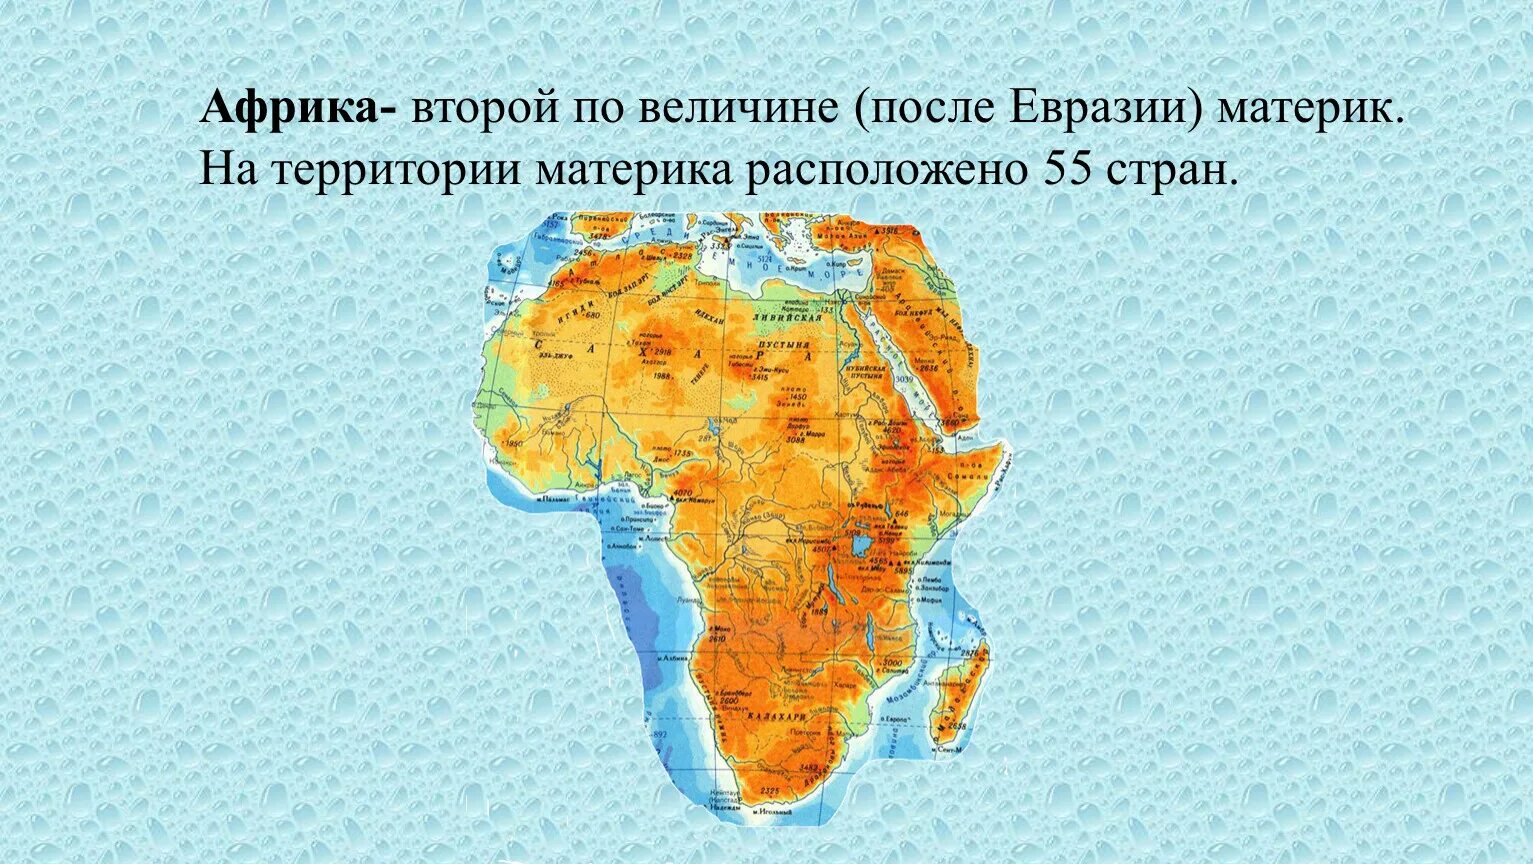 Экватор пересекает материк почти посередине. Карта Африки. Африка материк. Материк Африка на карте. Карта африканского континента.